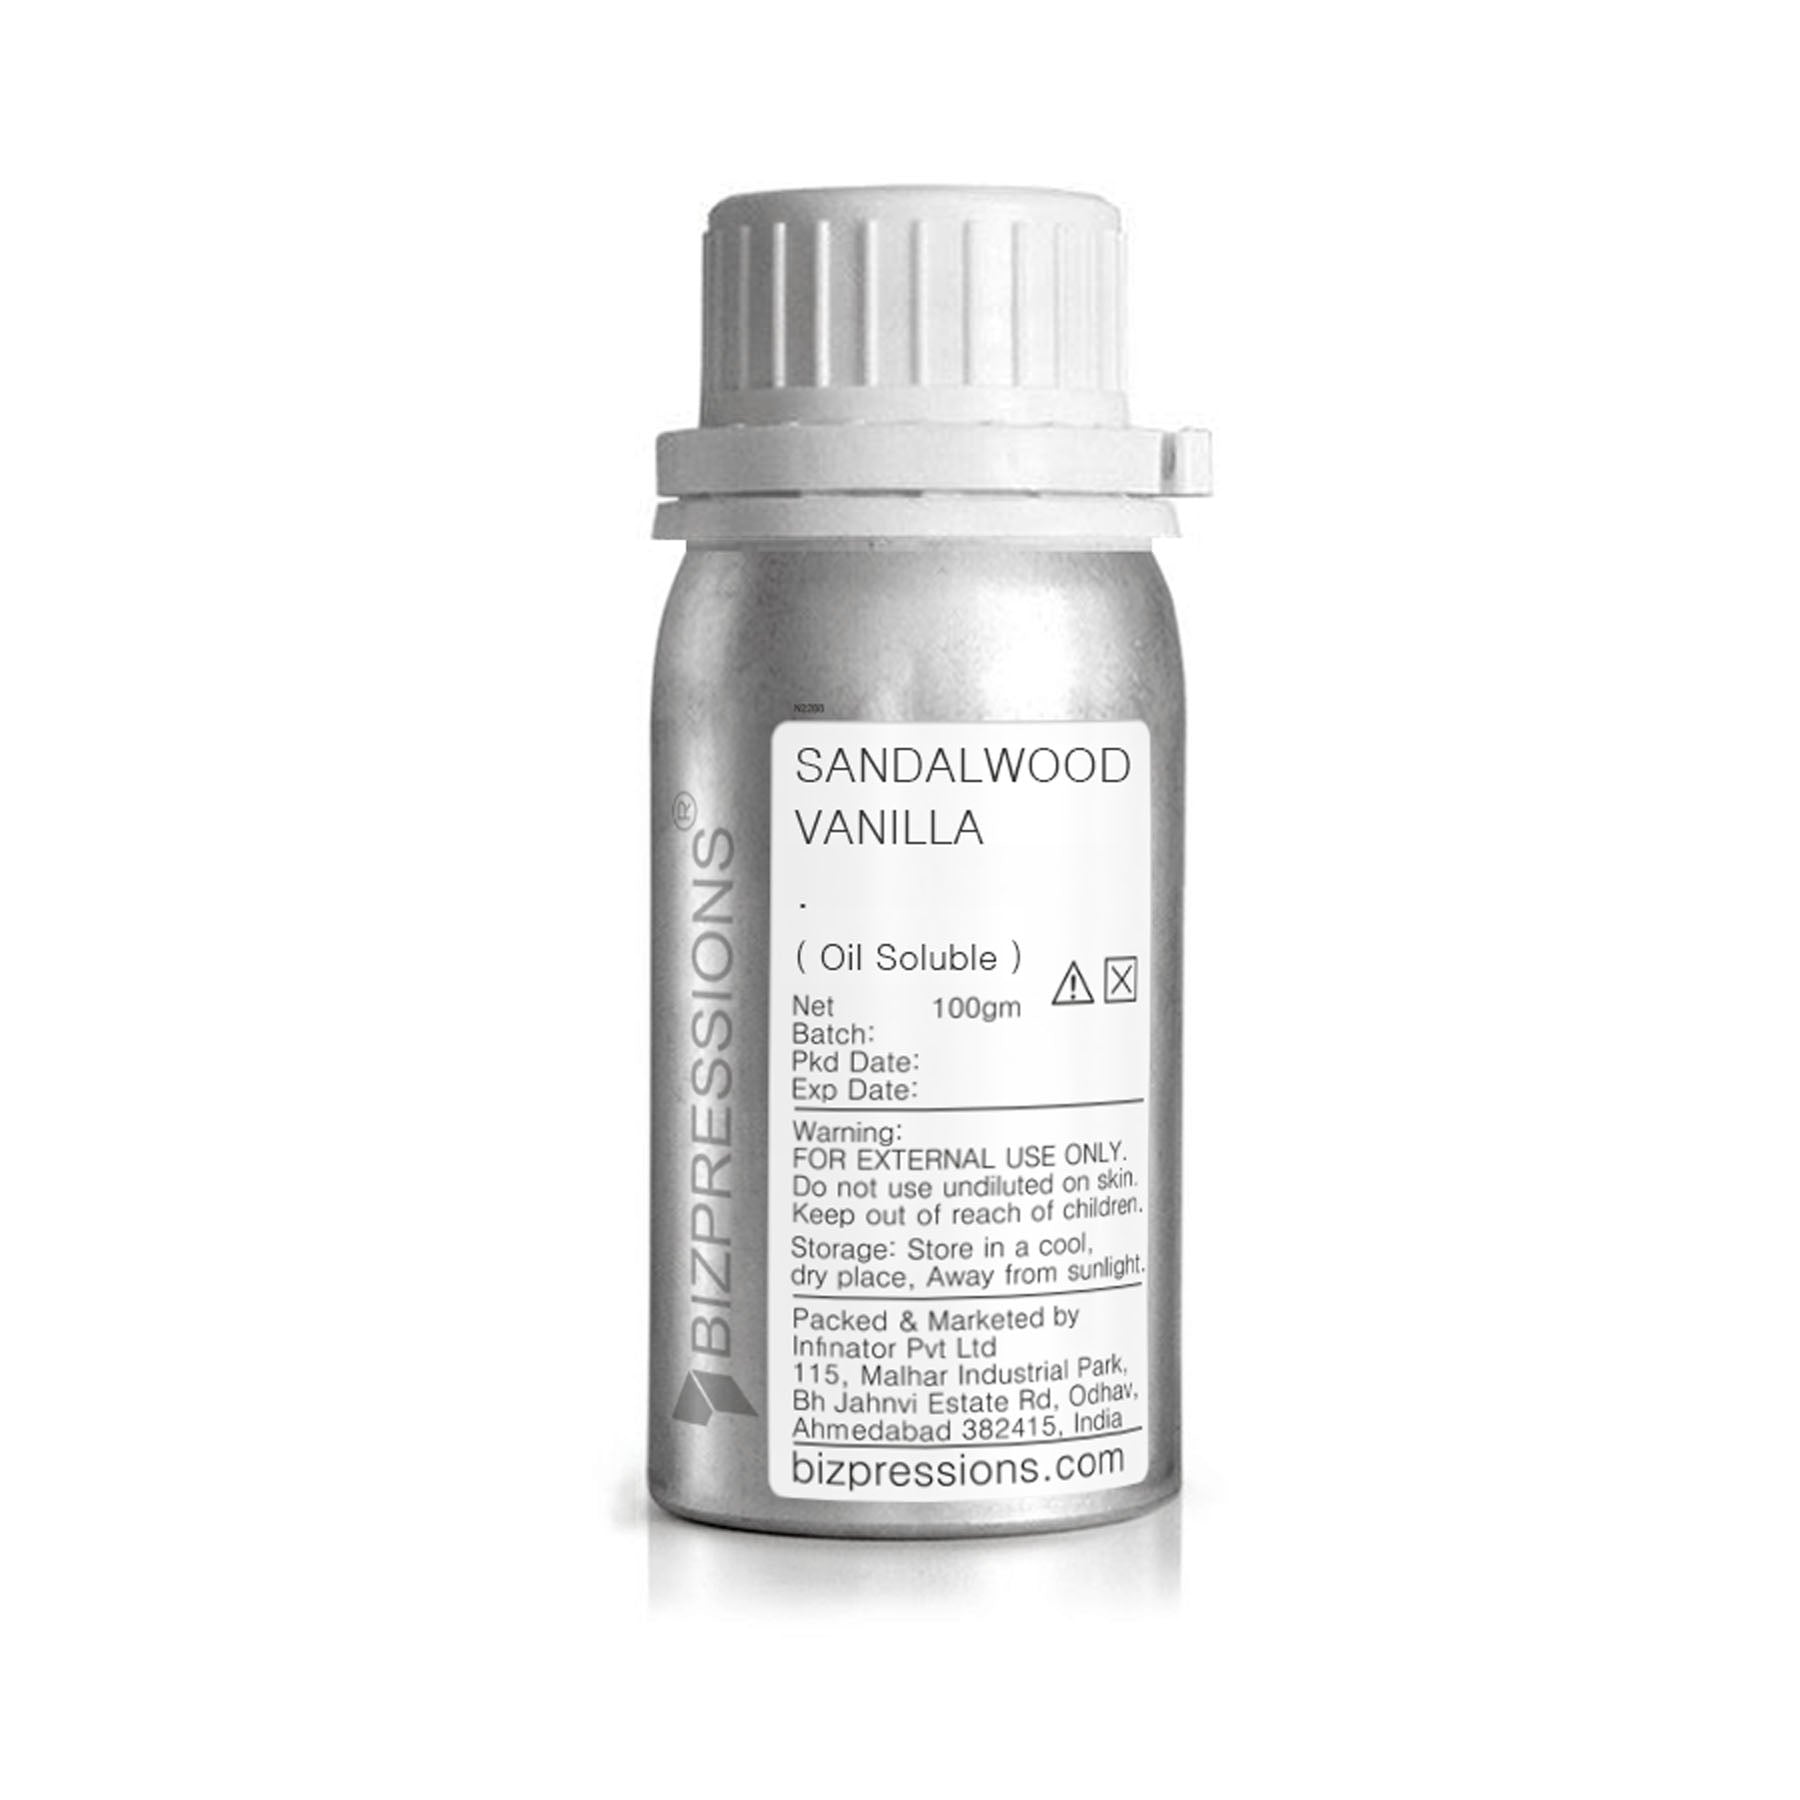 SANDALWOOD VANILLA - Fragrance ( Oil Soluble ) - 100 gm